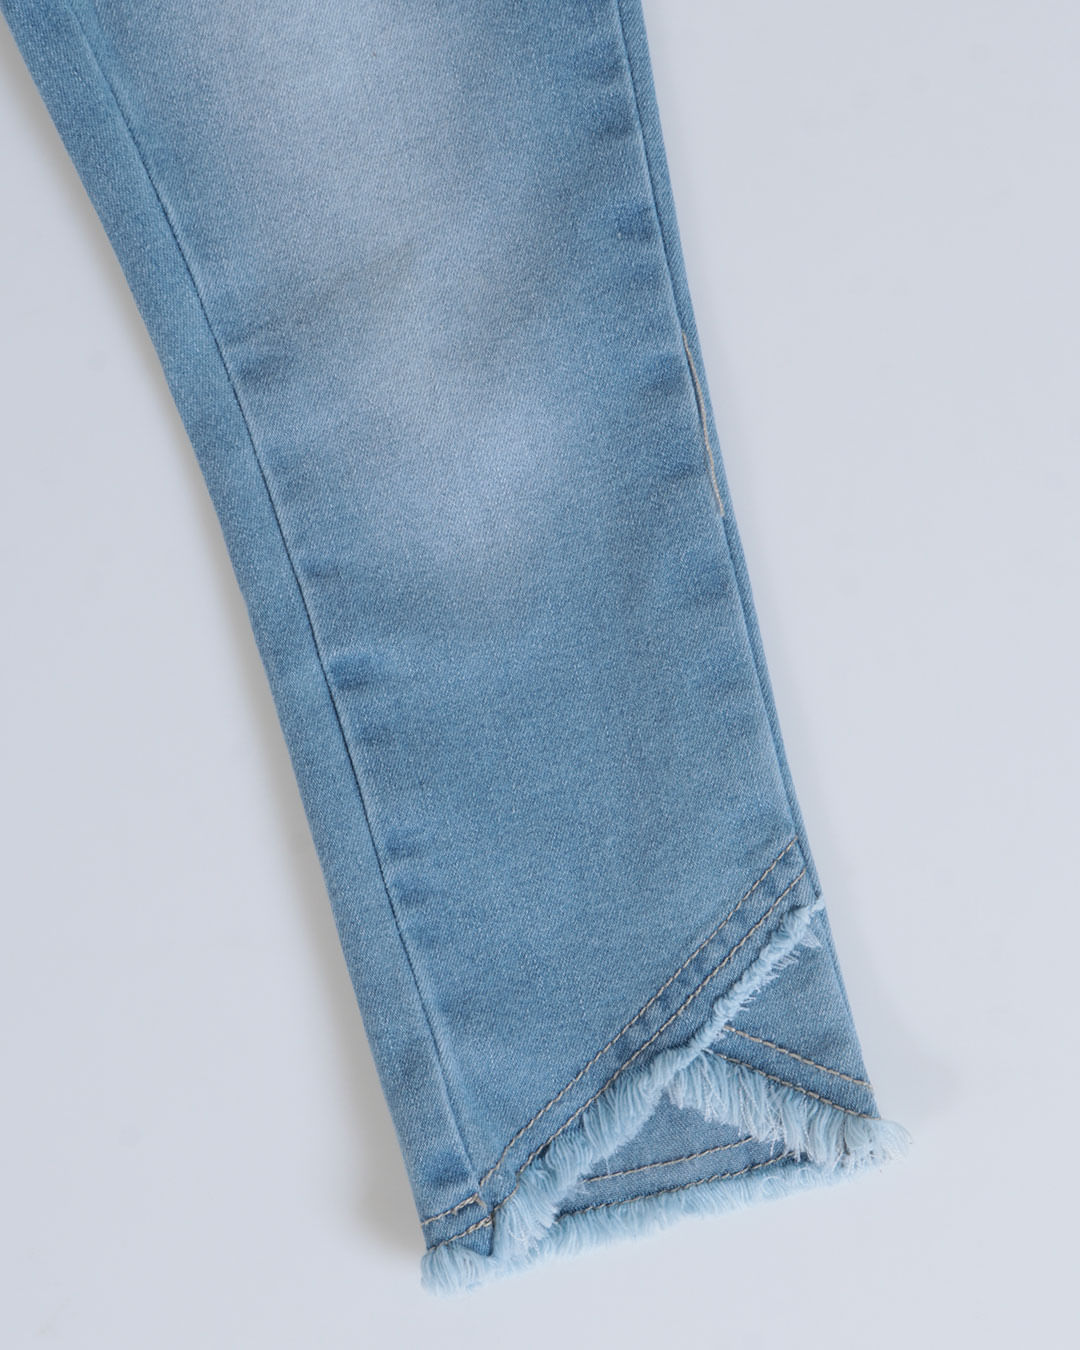 Calca-Jeans-Cinto-Tecido-F-13-Lc---Blue-Jeans-Claro